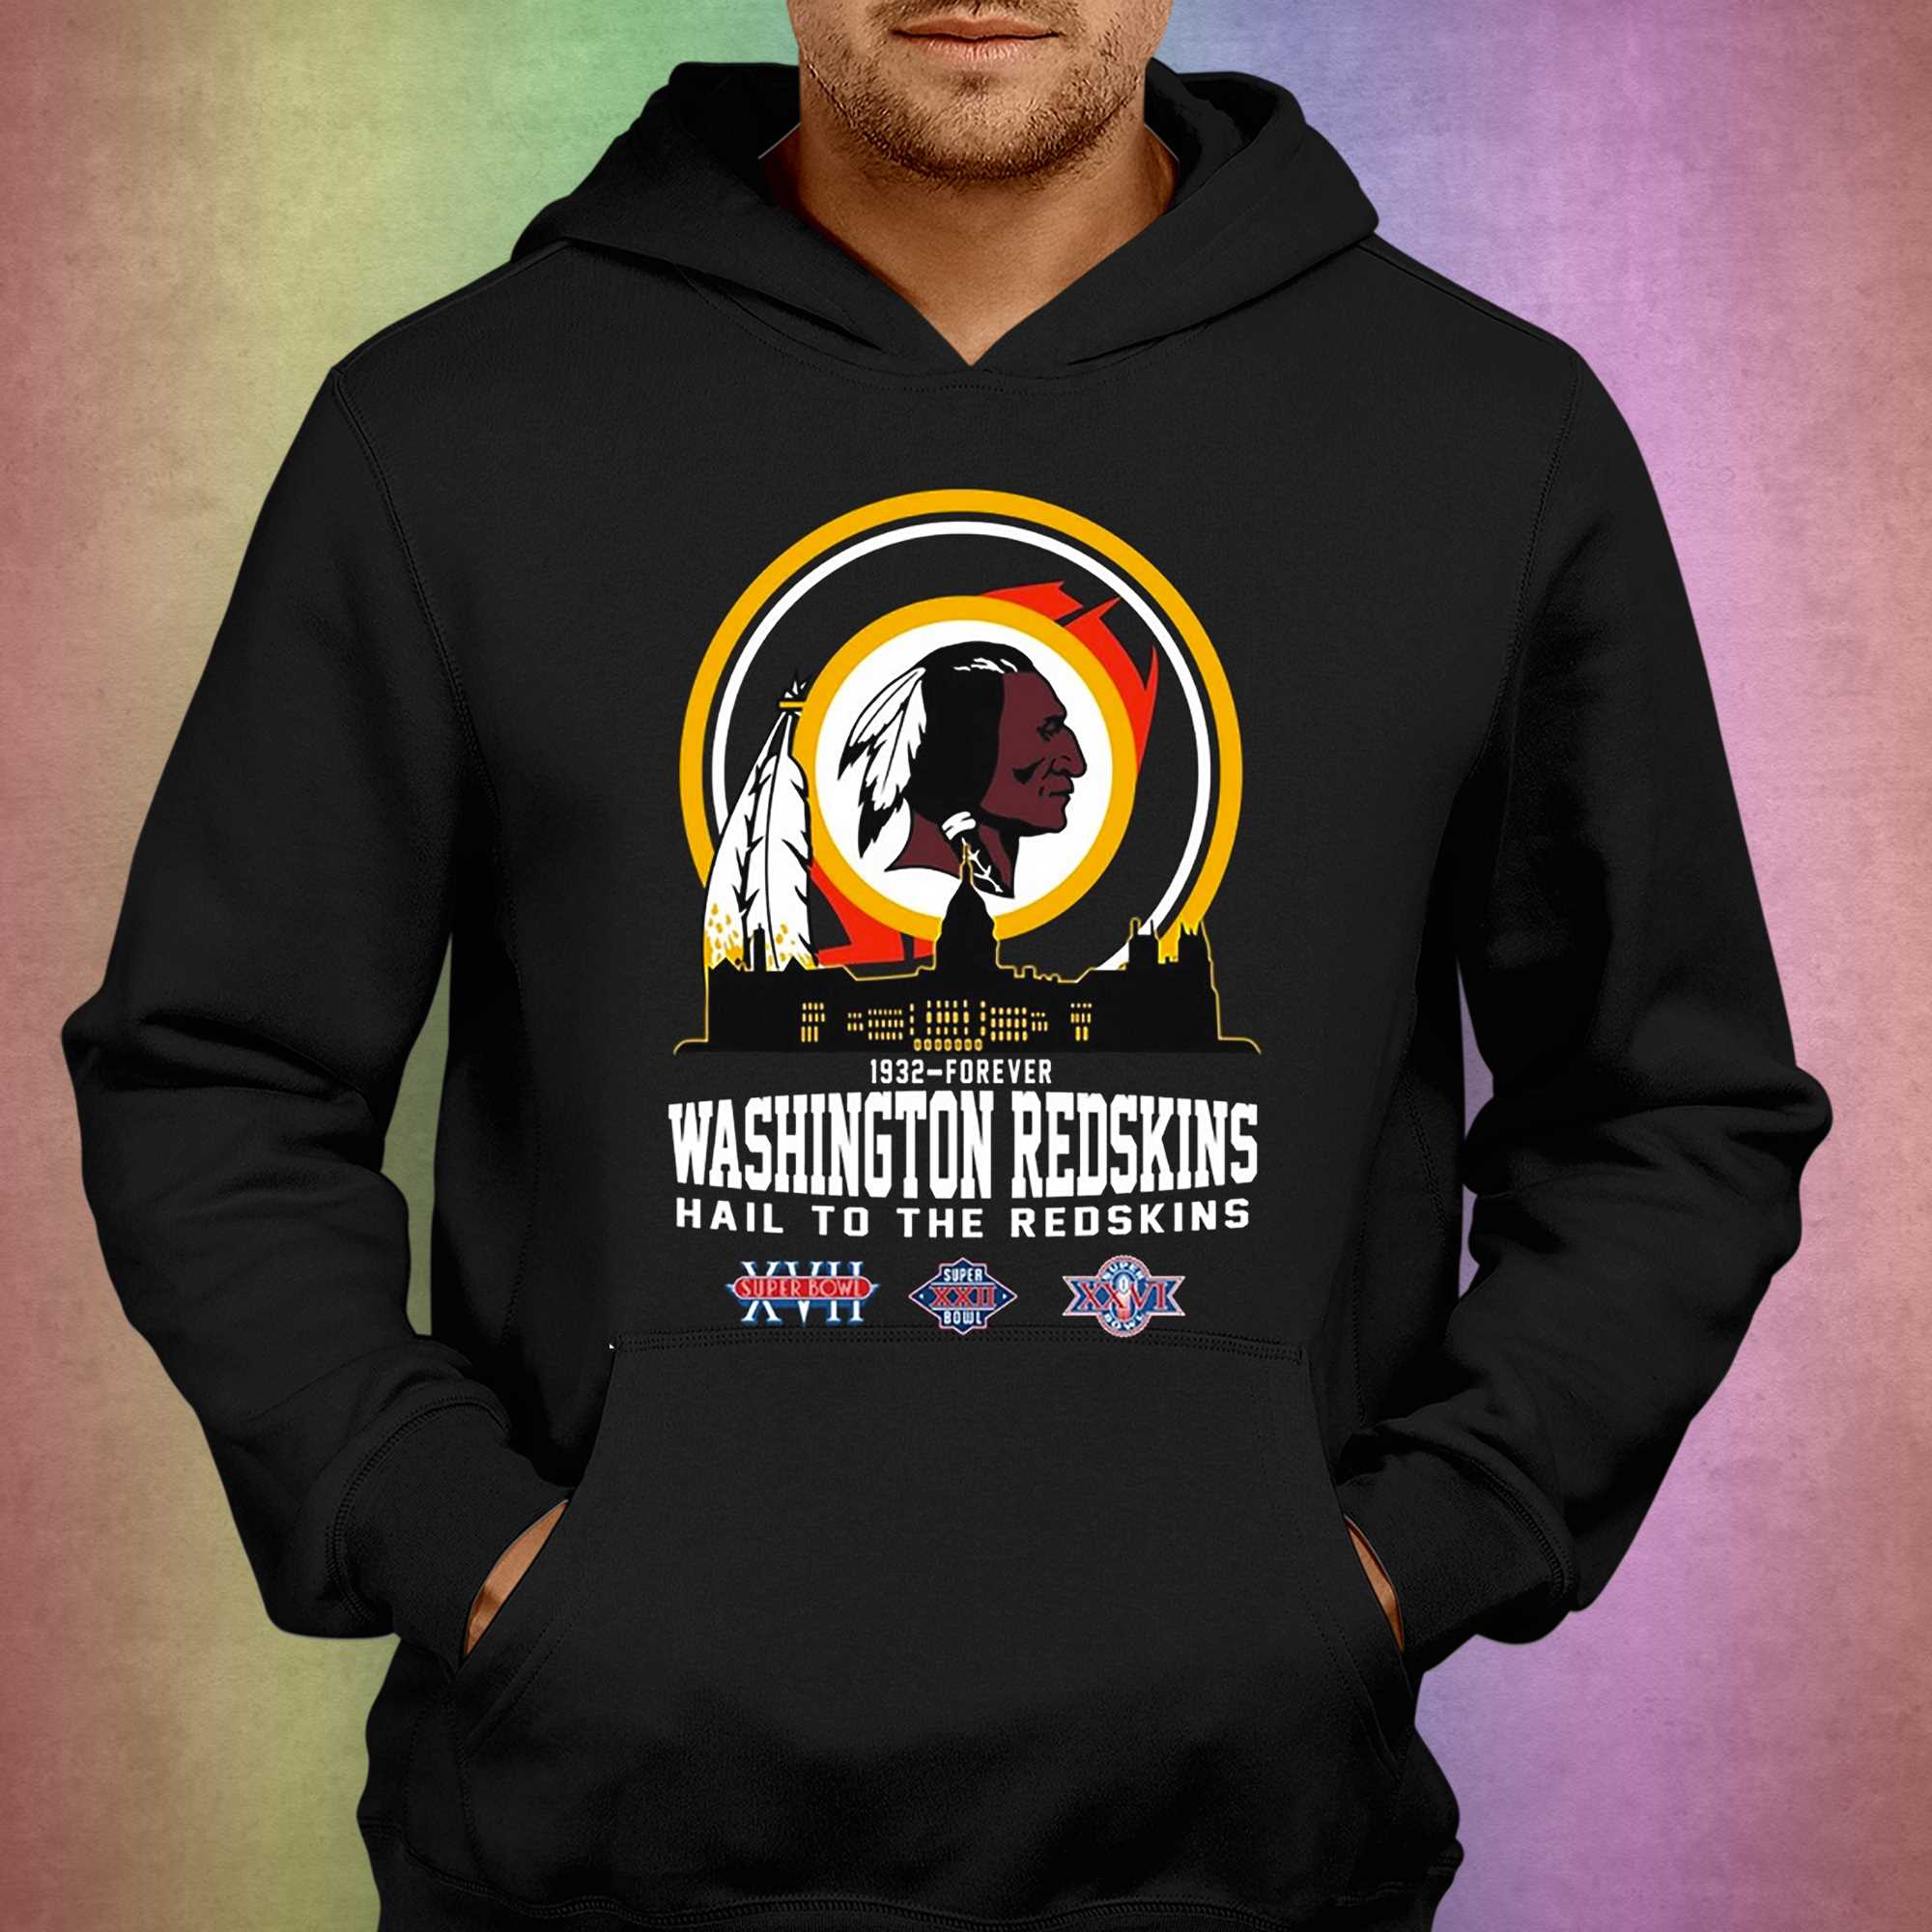 Washington Redskins 1937 – Forever Hail To The Redskins T-shirt, hoodie,  longsleeve, sweatshirt, v-neck tee